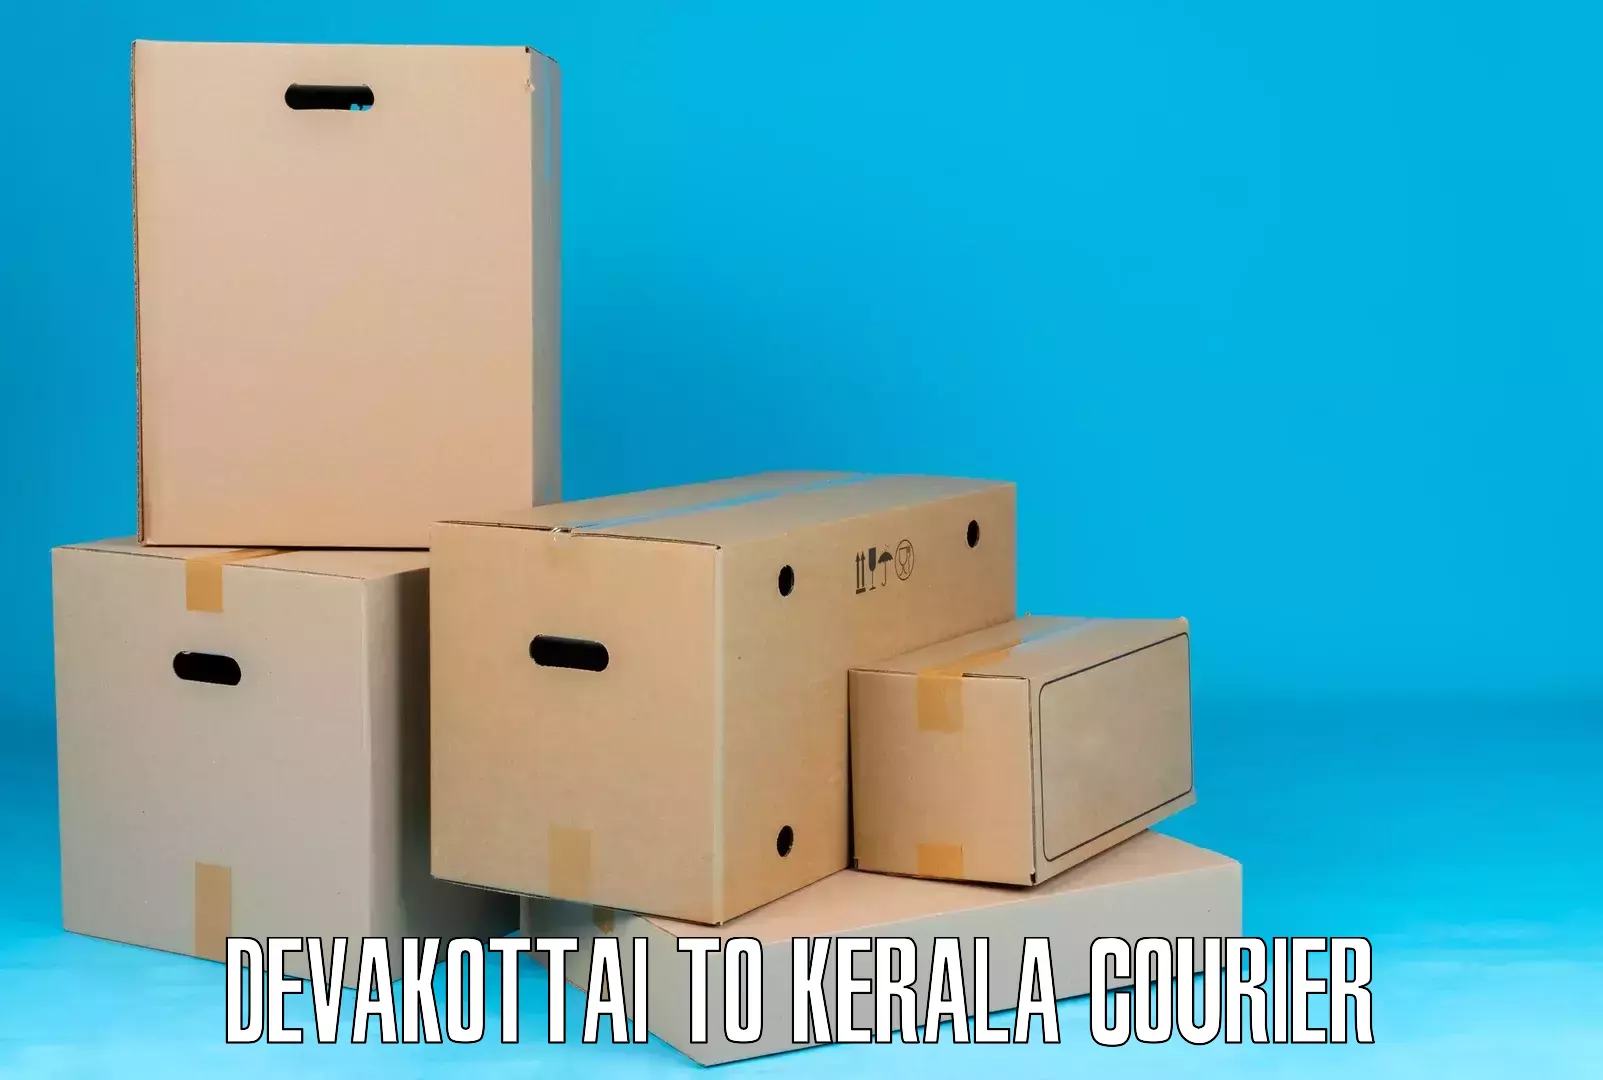 Courier service comparison Devakottai to Ramankary